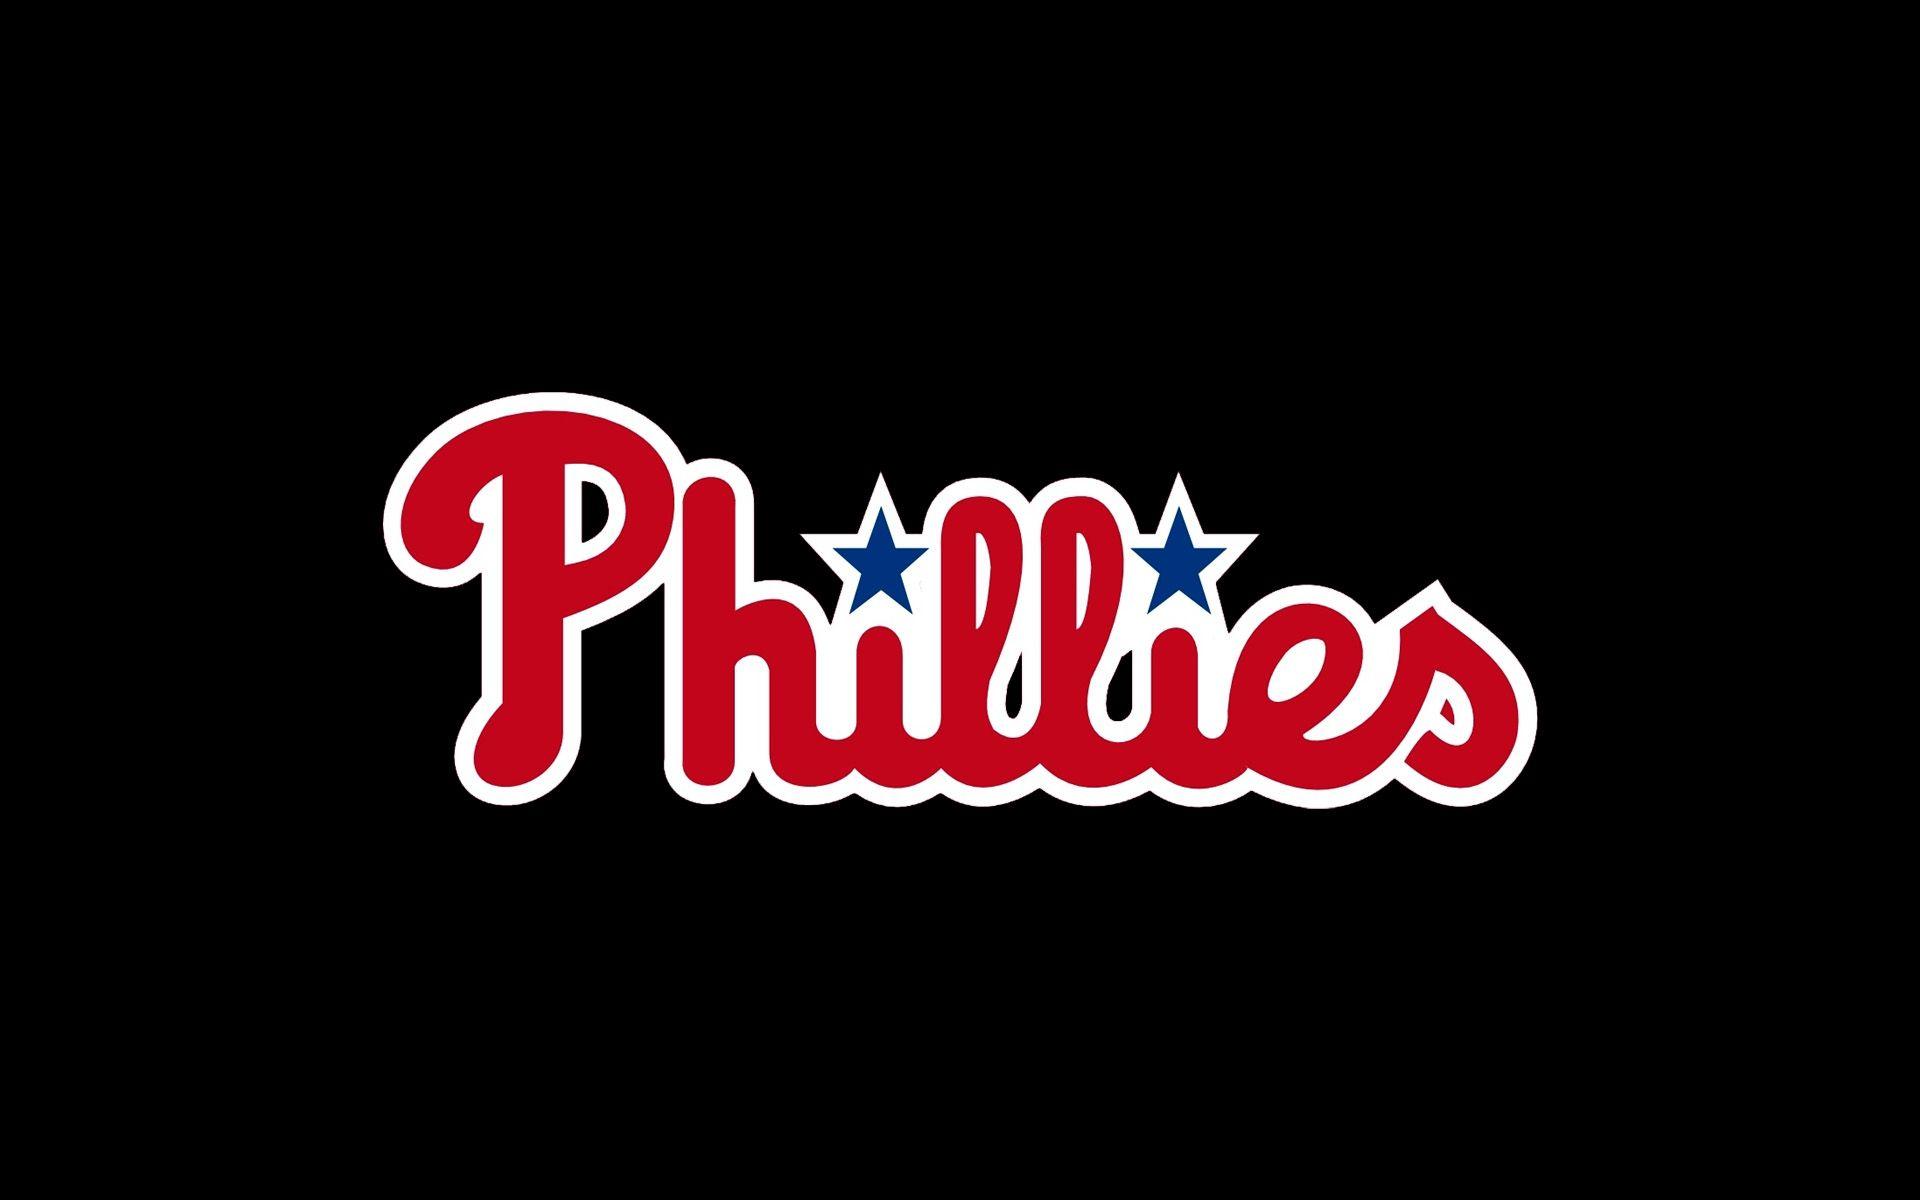 Download Philadelphia Phillies Baseball Logo Wallpaper